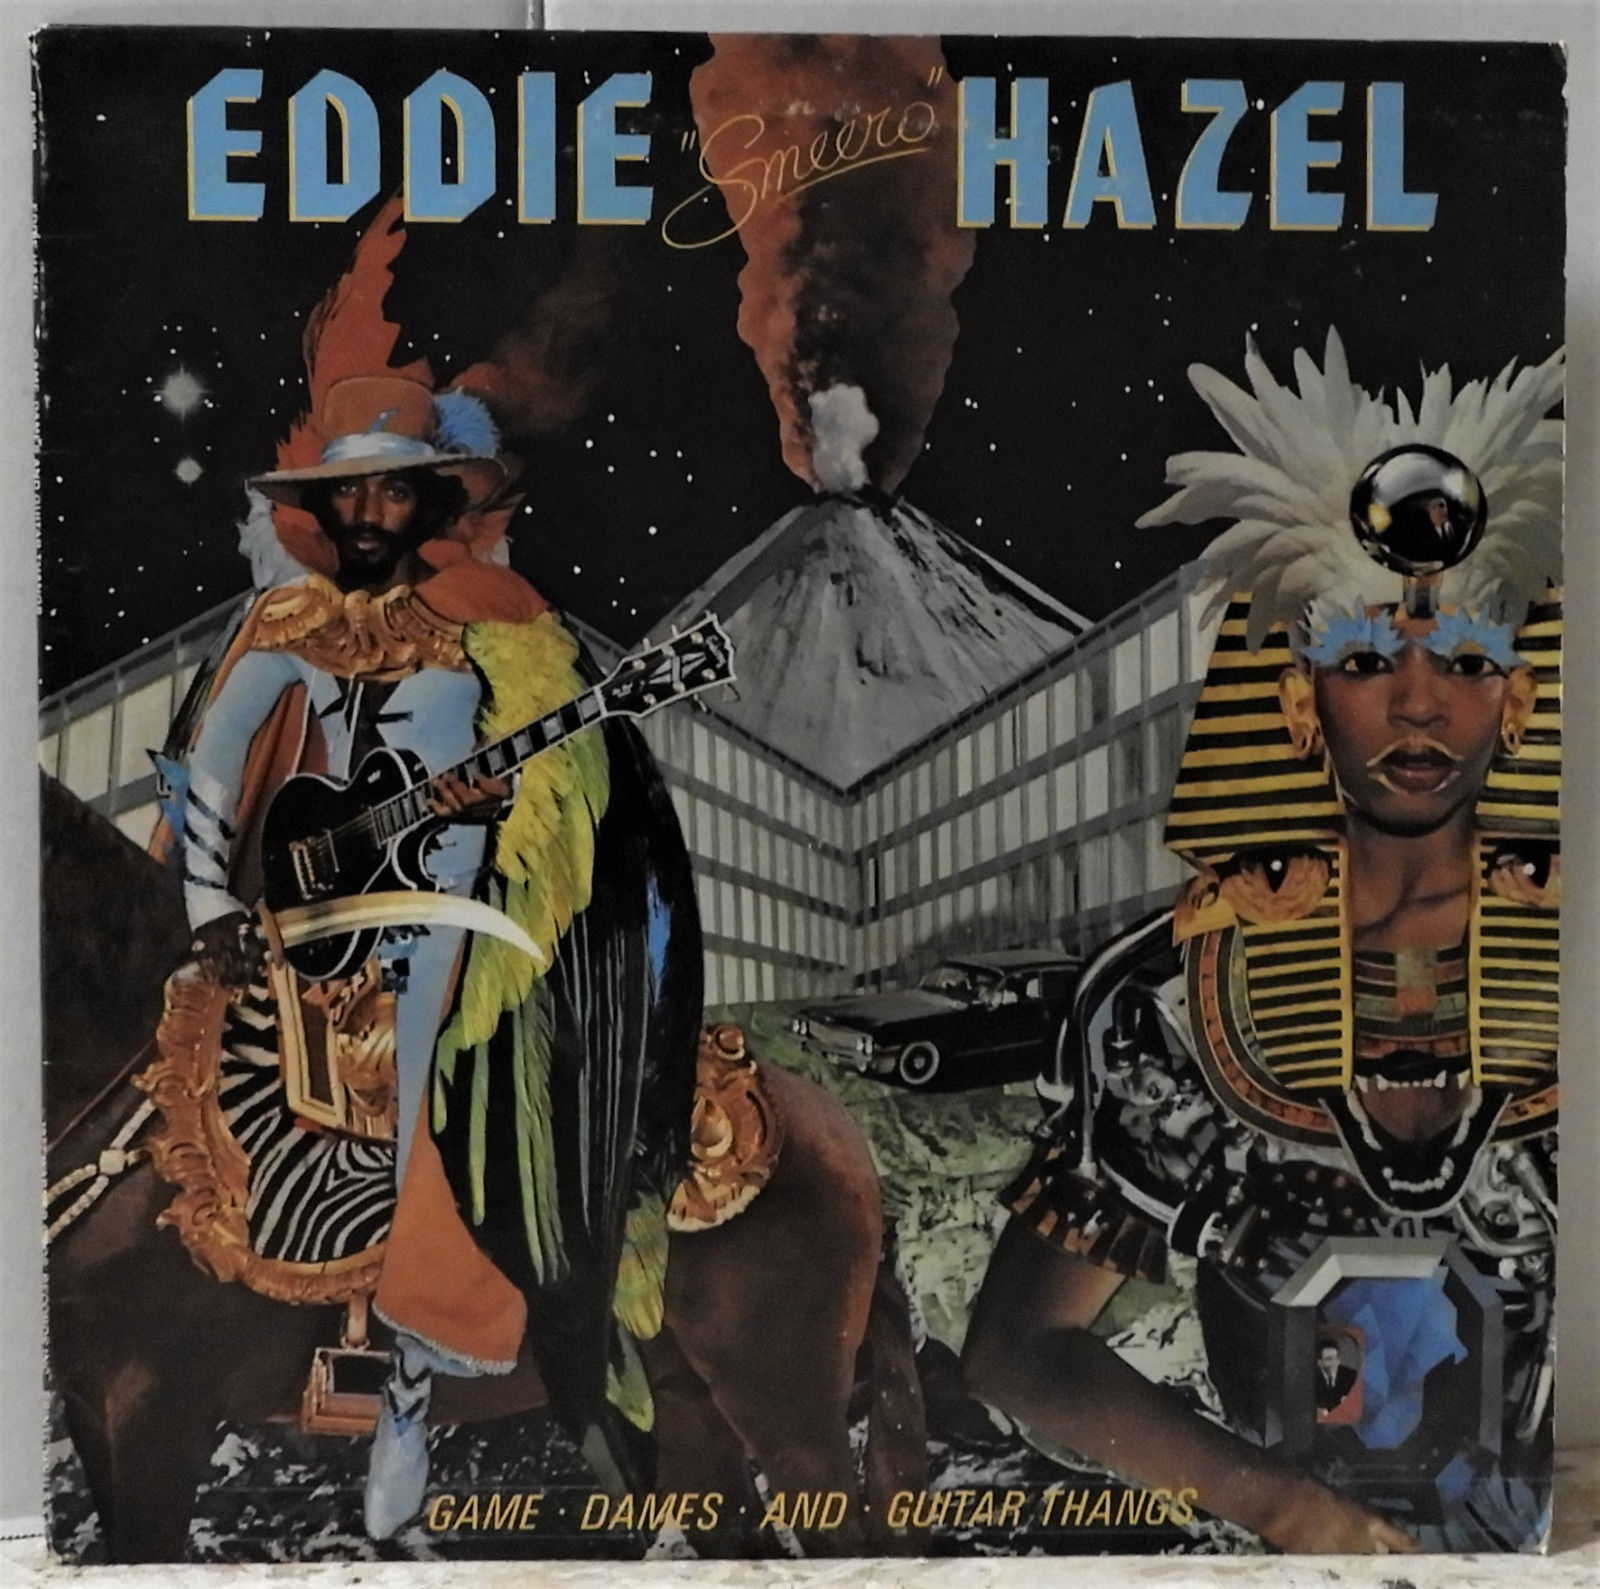 popsike.com - Eddie Hazel - Game Dames And Guitar Thangs - Warner Bros 1977  - OP - NM - auction details